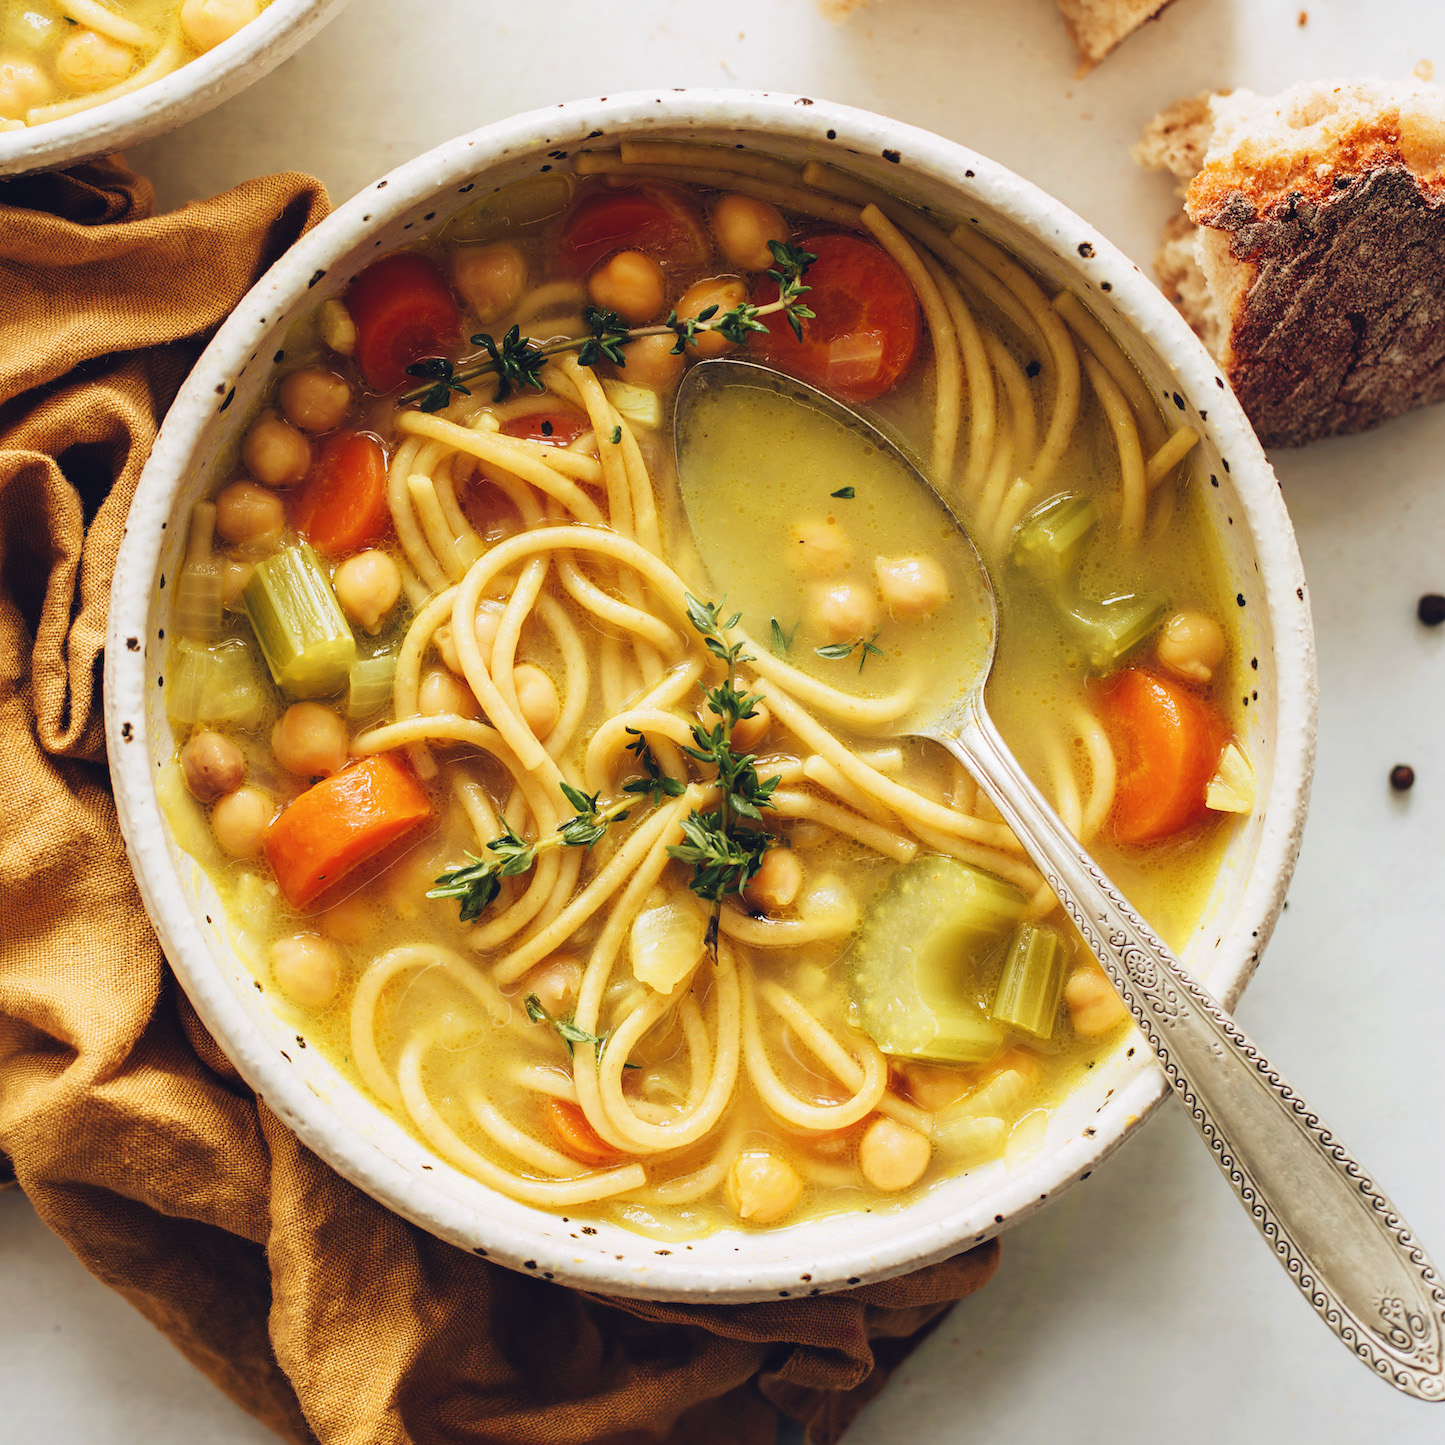 https://minimalistbaker.com/wp-content/uploads/2020/11/Chickpea-Noodle-Soup-SQUARE.jpg